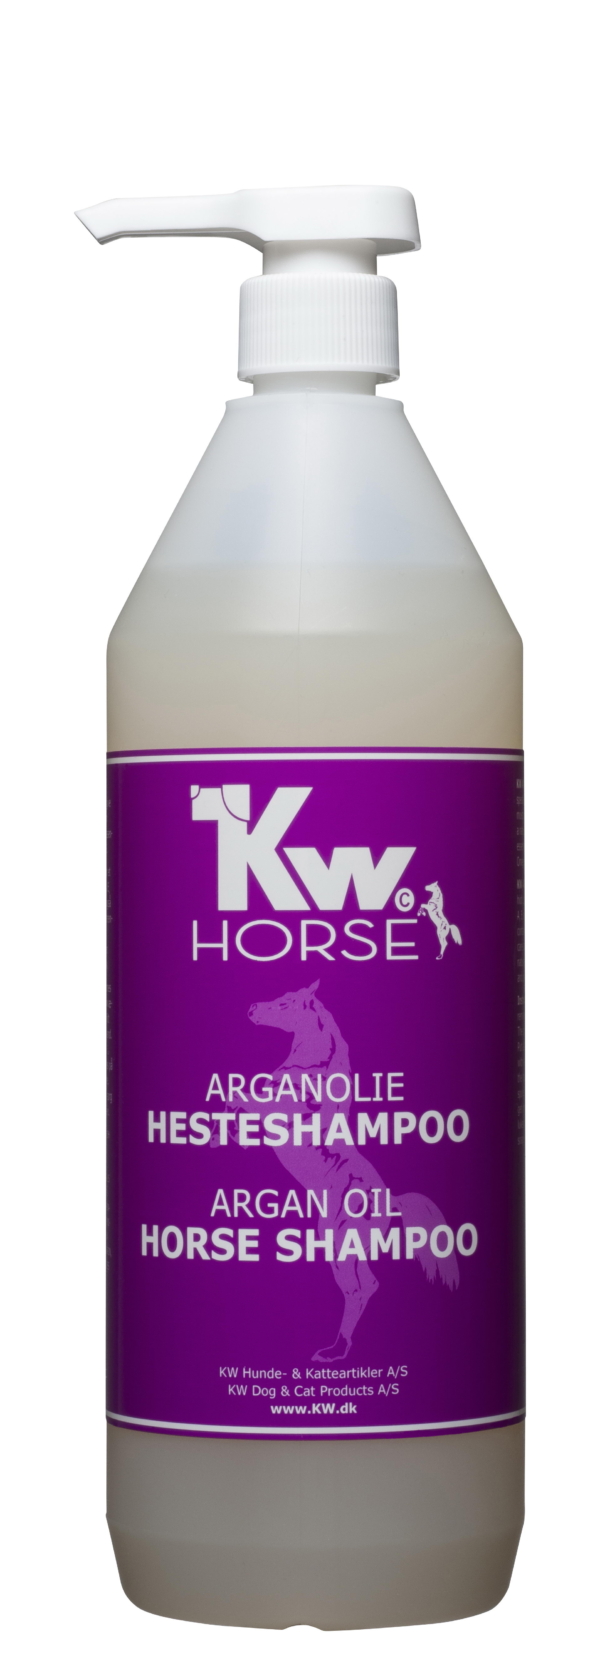 Argonolie Heste shampoo